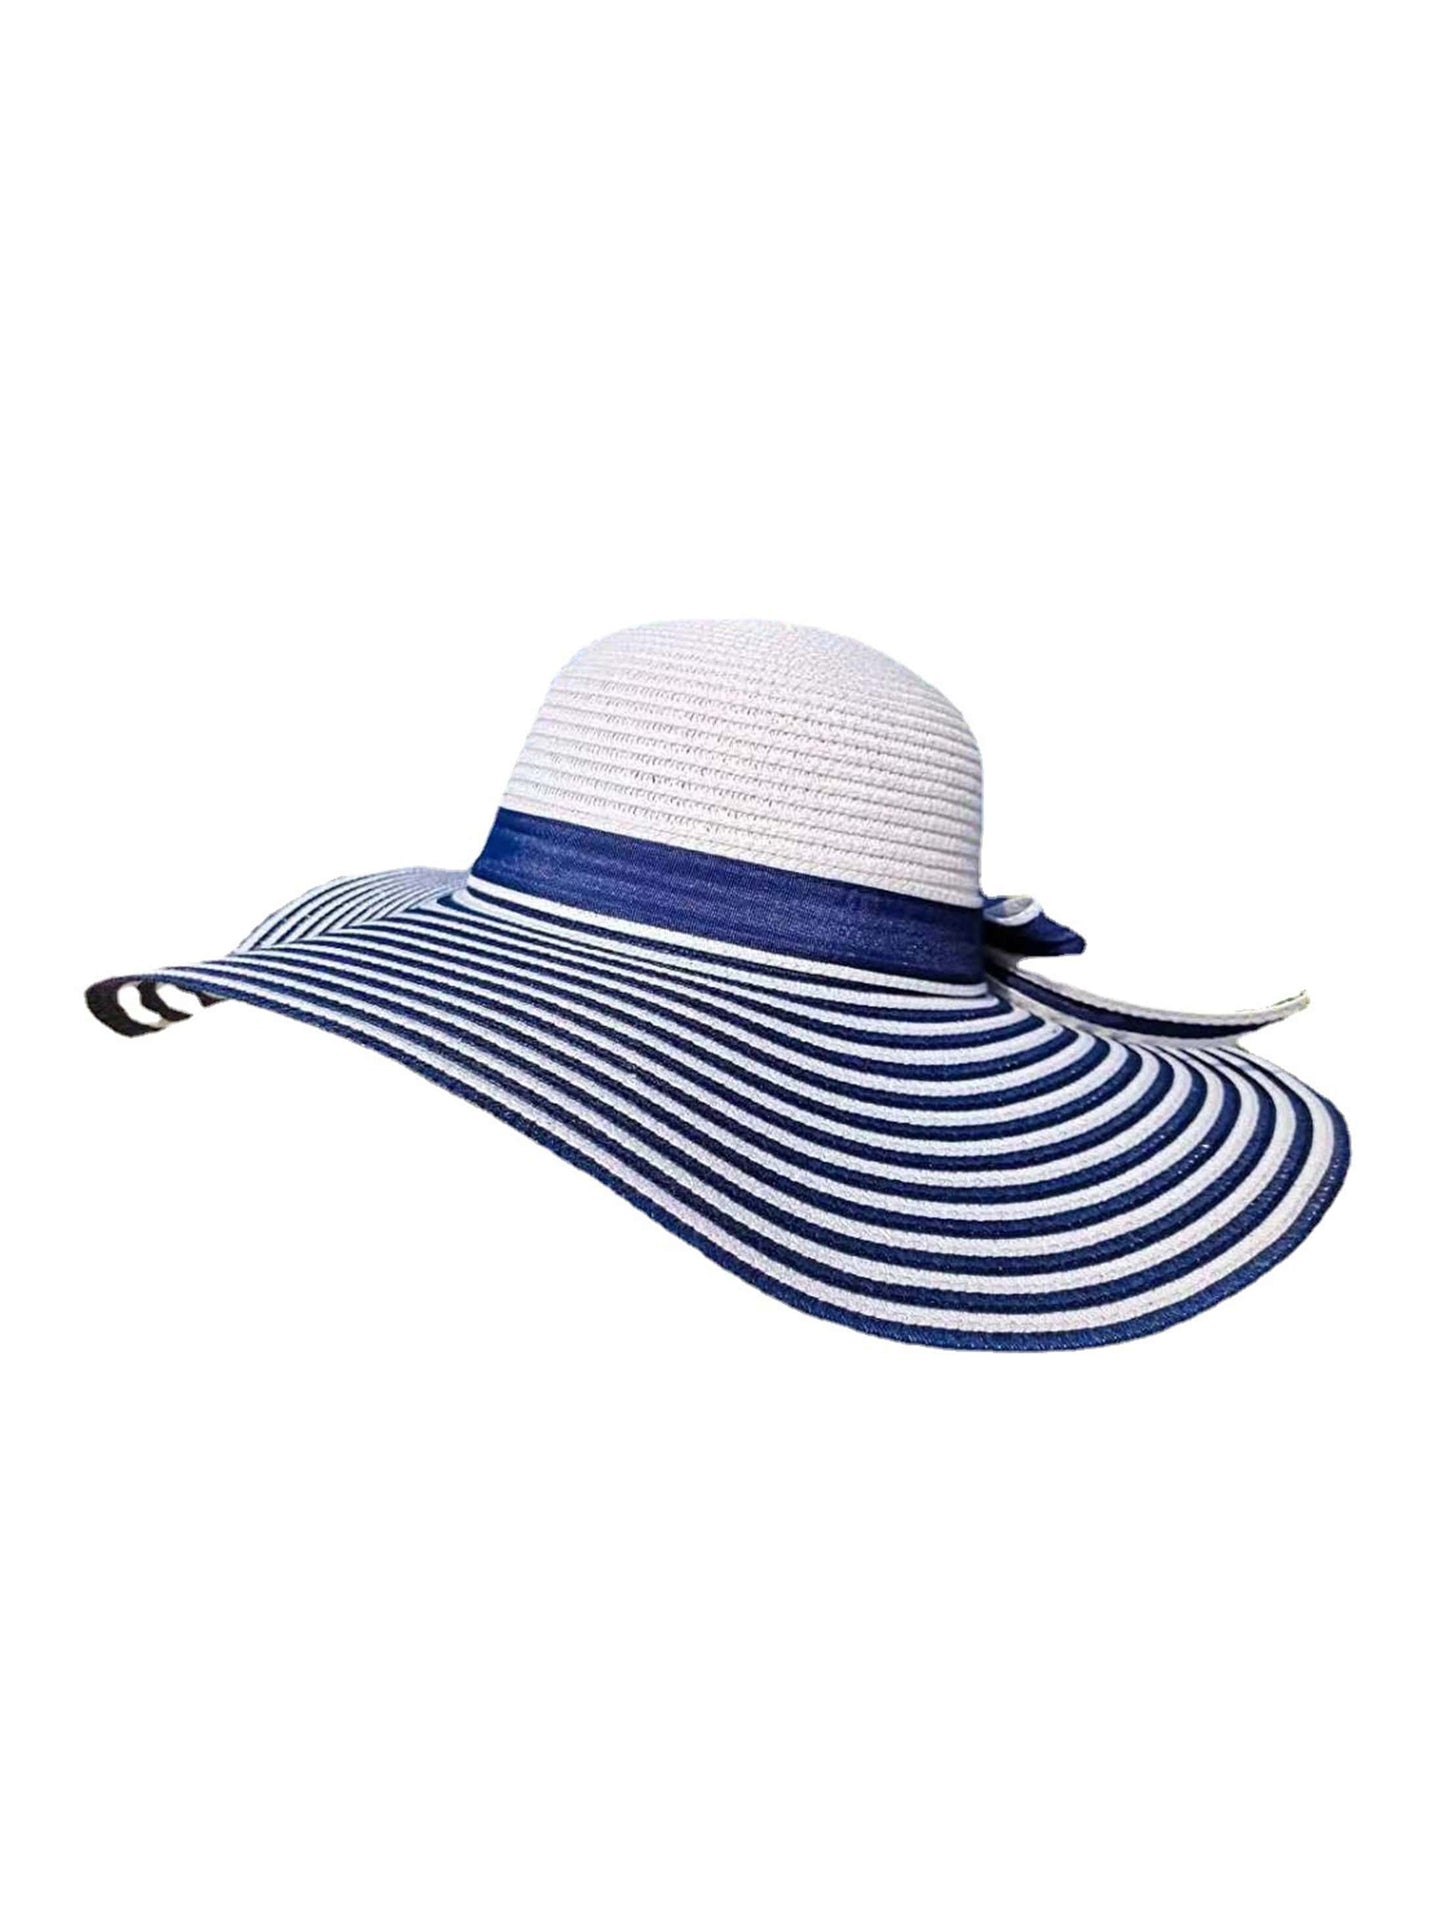 Fashionable Blue & White Striped Wide Brim Straw Hat Uv Protective